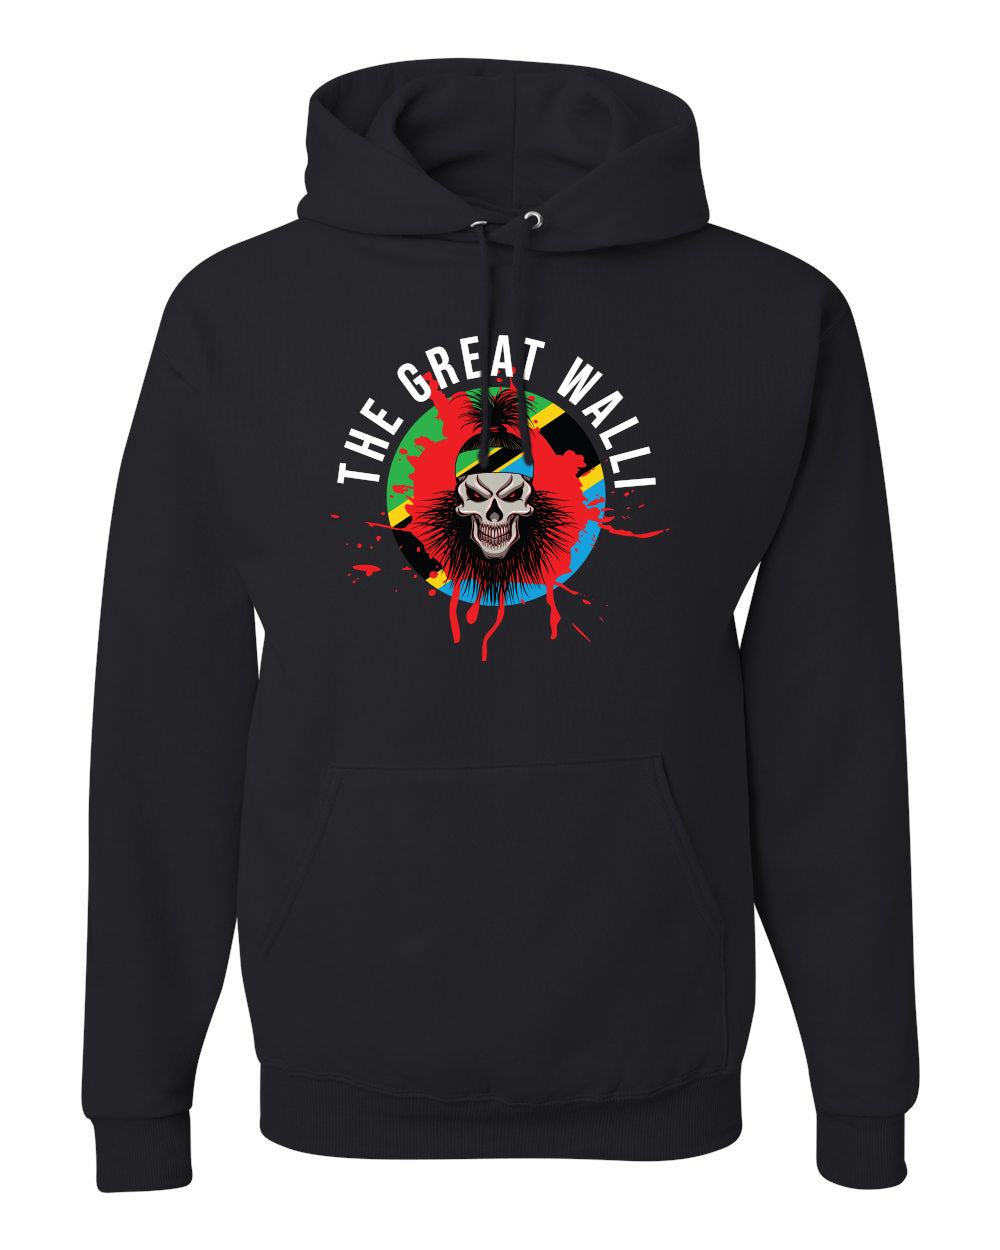 The Great Walli Hooded Sweatshirt